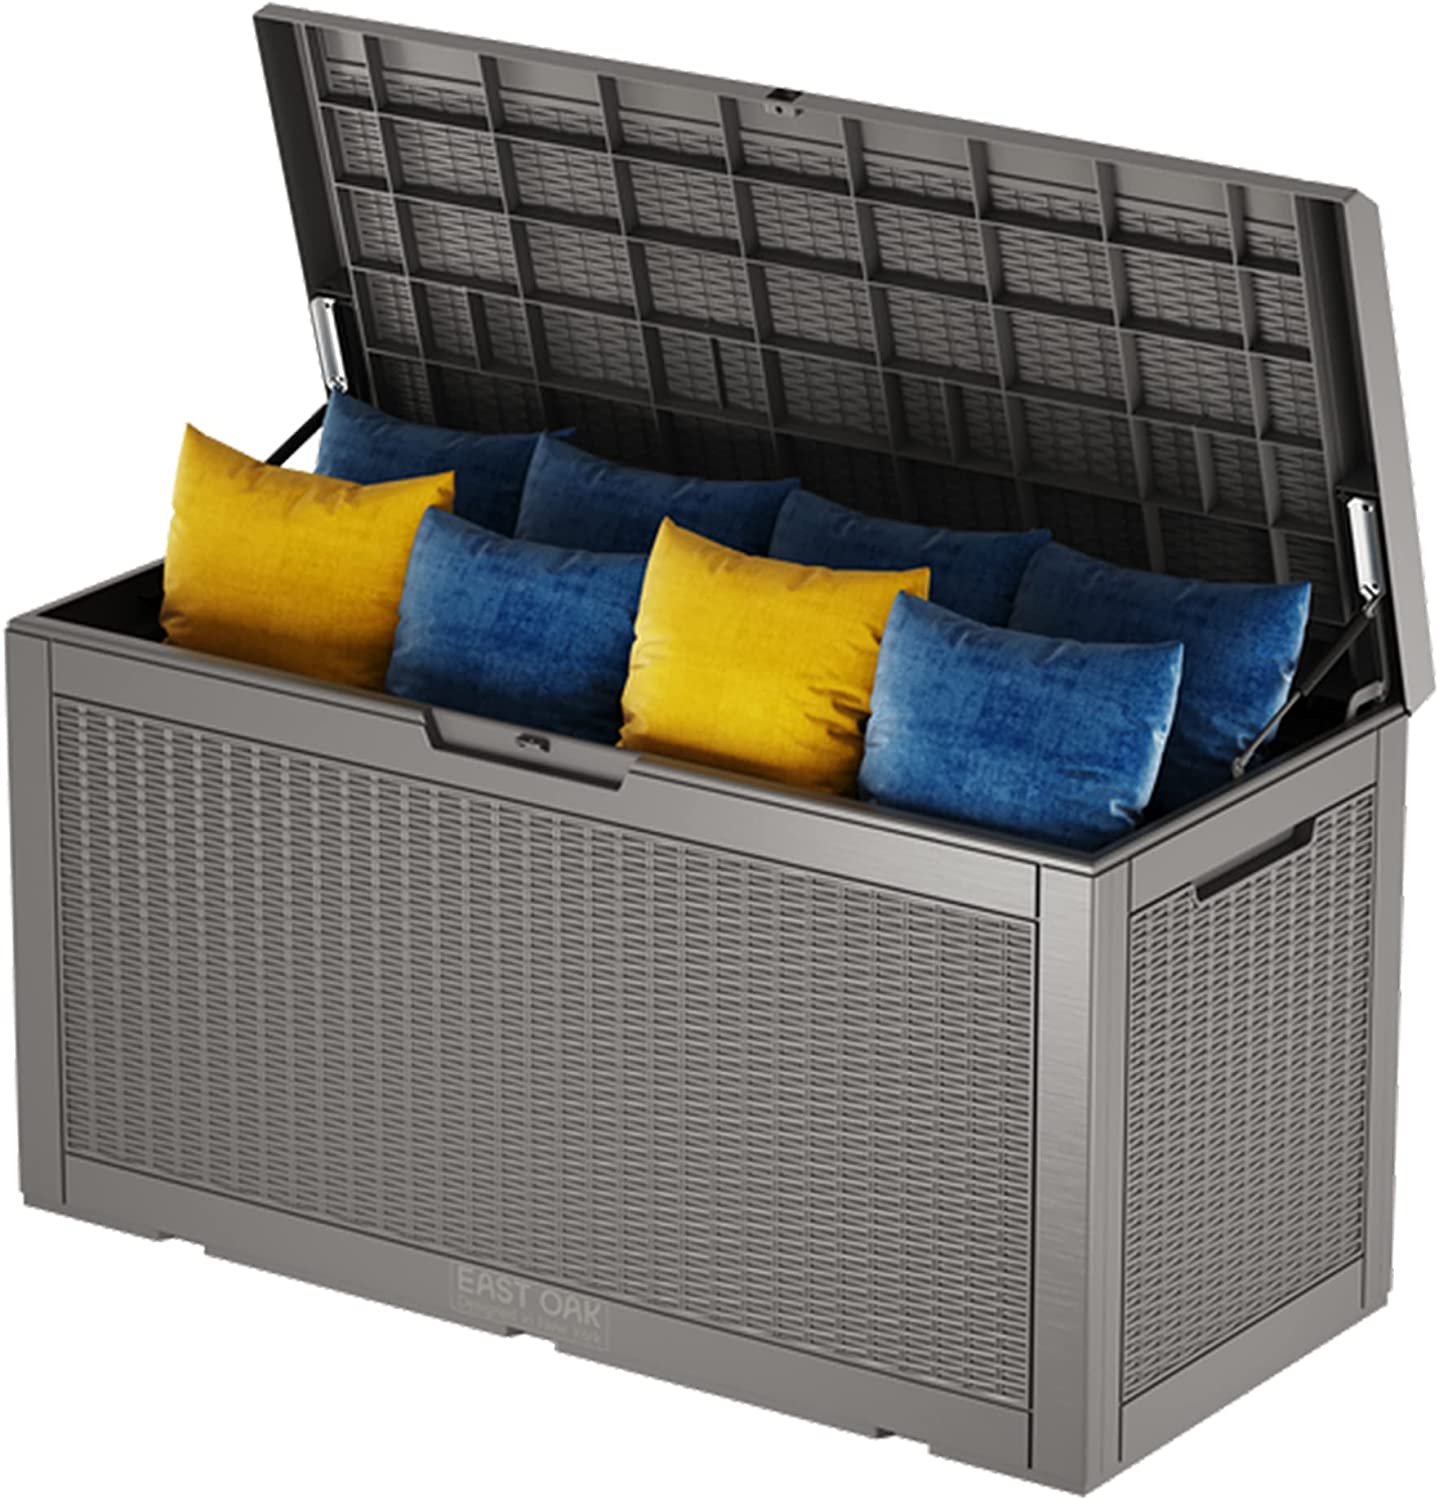 EAST OAK 2-In-1 Lockable Deck Box & Patio Storage, 100-Gallon